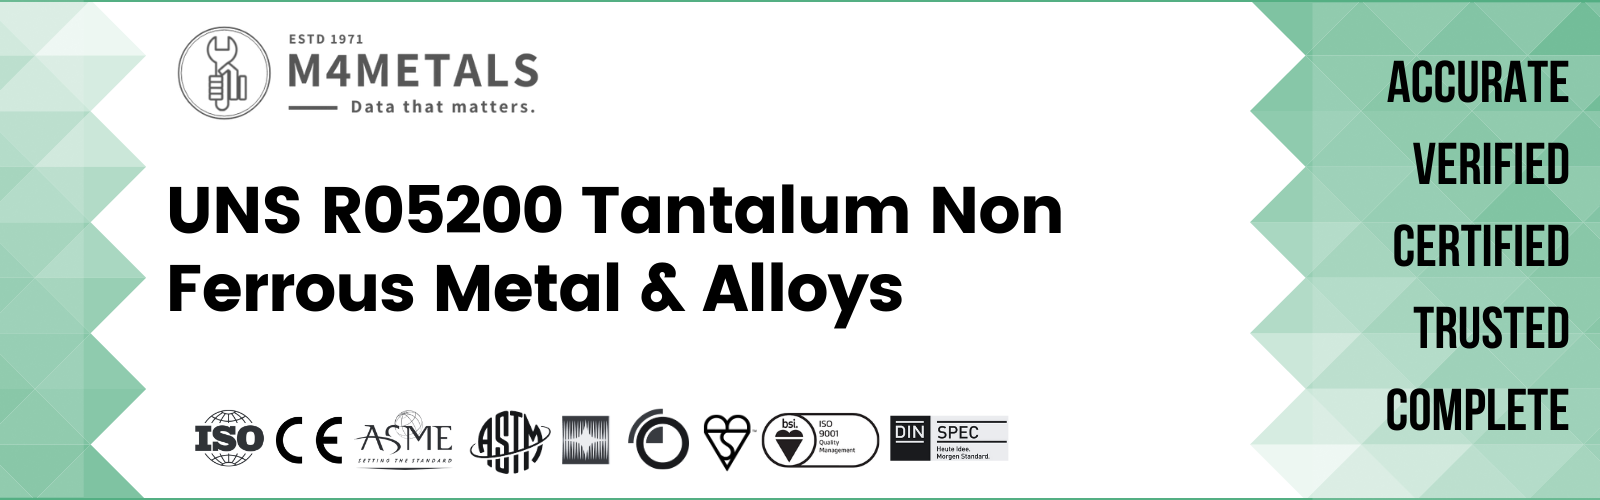 Tantalum UNS R05200